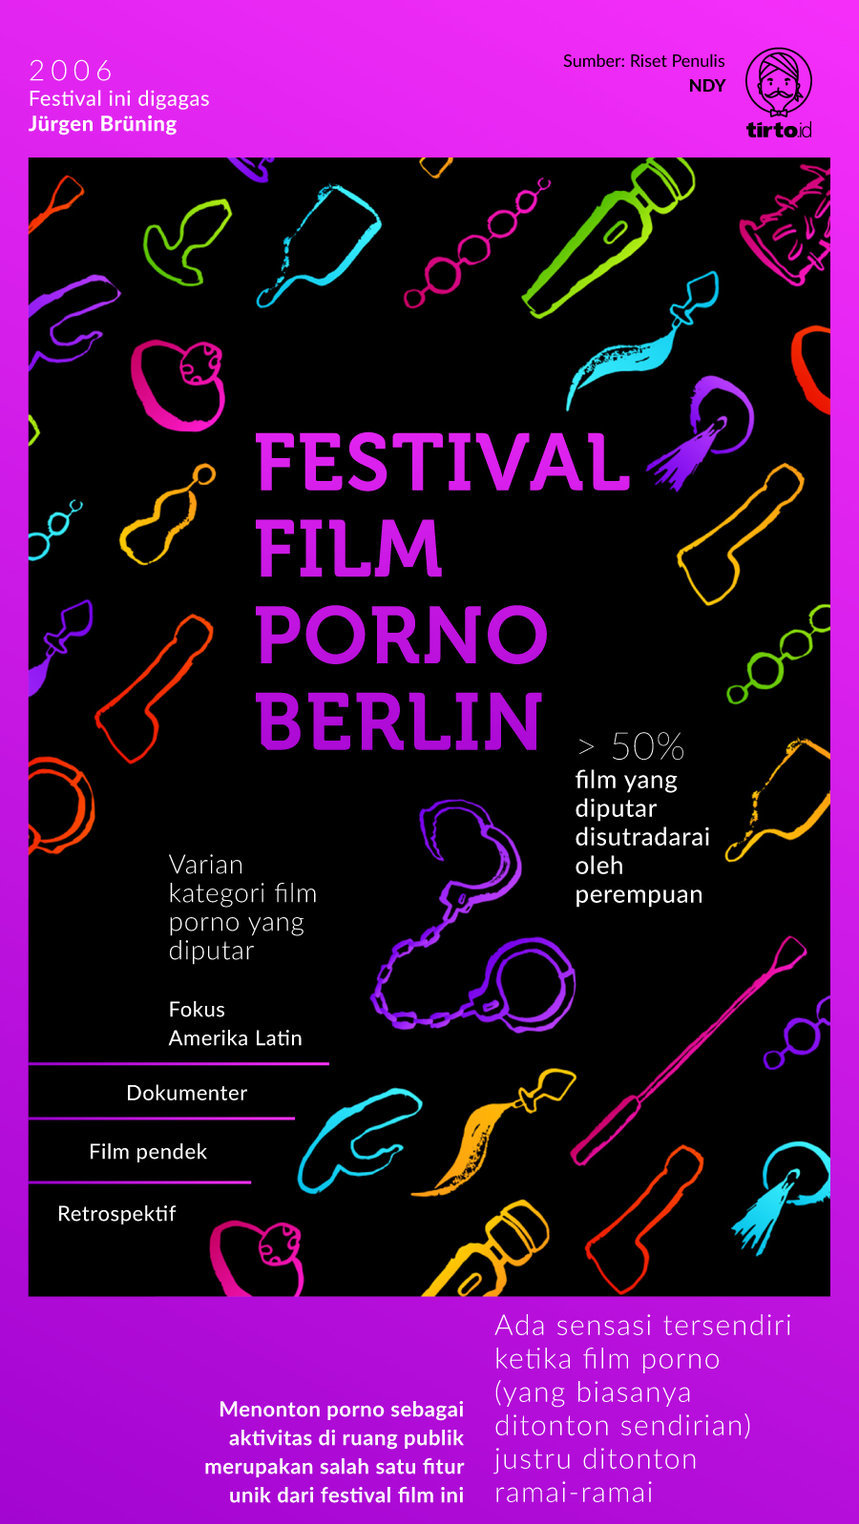 Berlin Porn Film Festival Nonton Bokep Di Ruang Publik